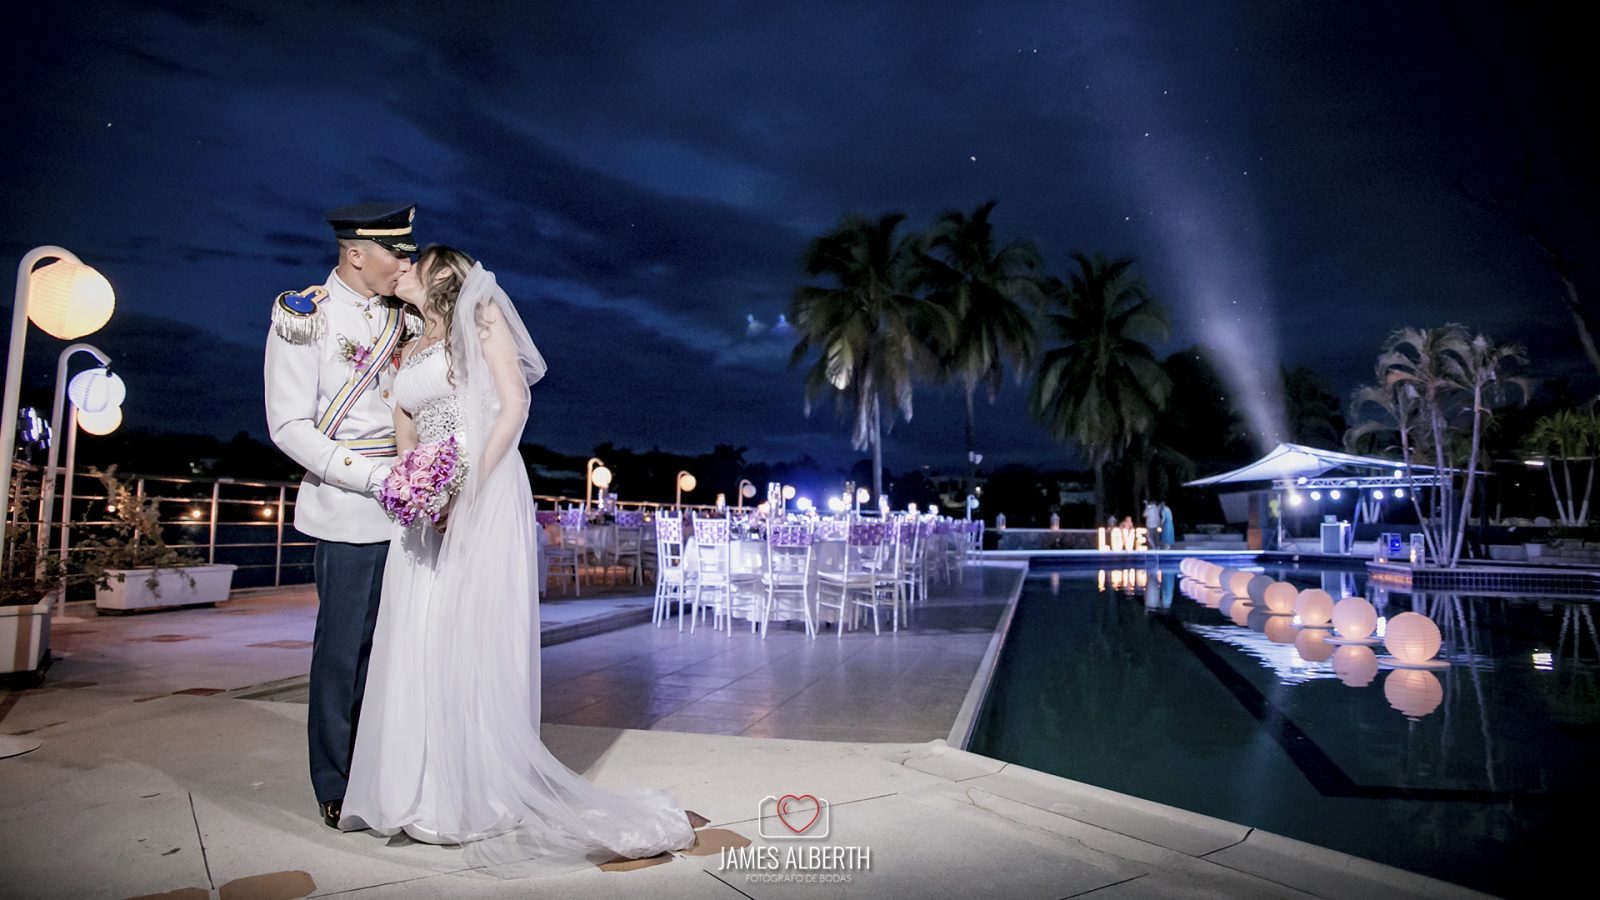 fotografias-de-bodas-en-la-playa-monasterio-resort-girardot-fotografos-de-bodas-james-alberth-fotografias-de-noche-bodas